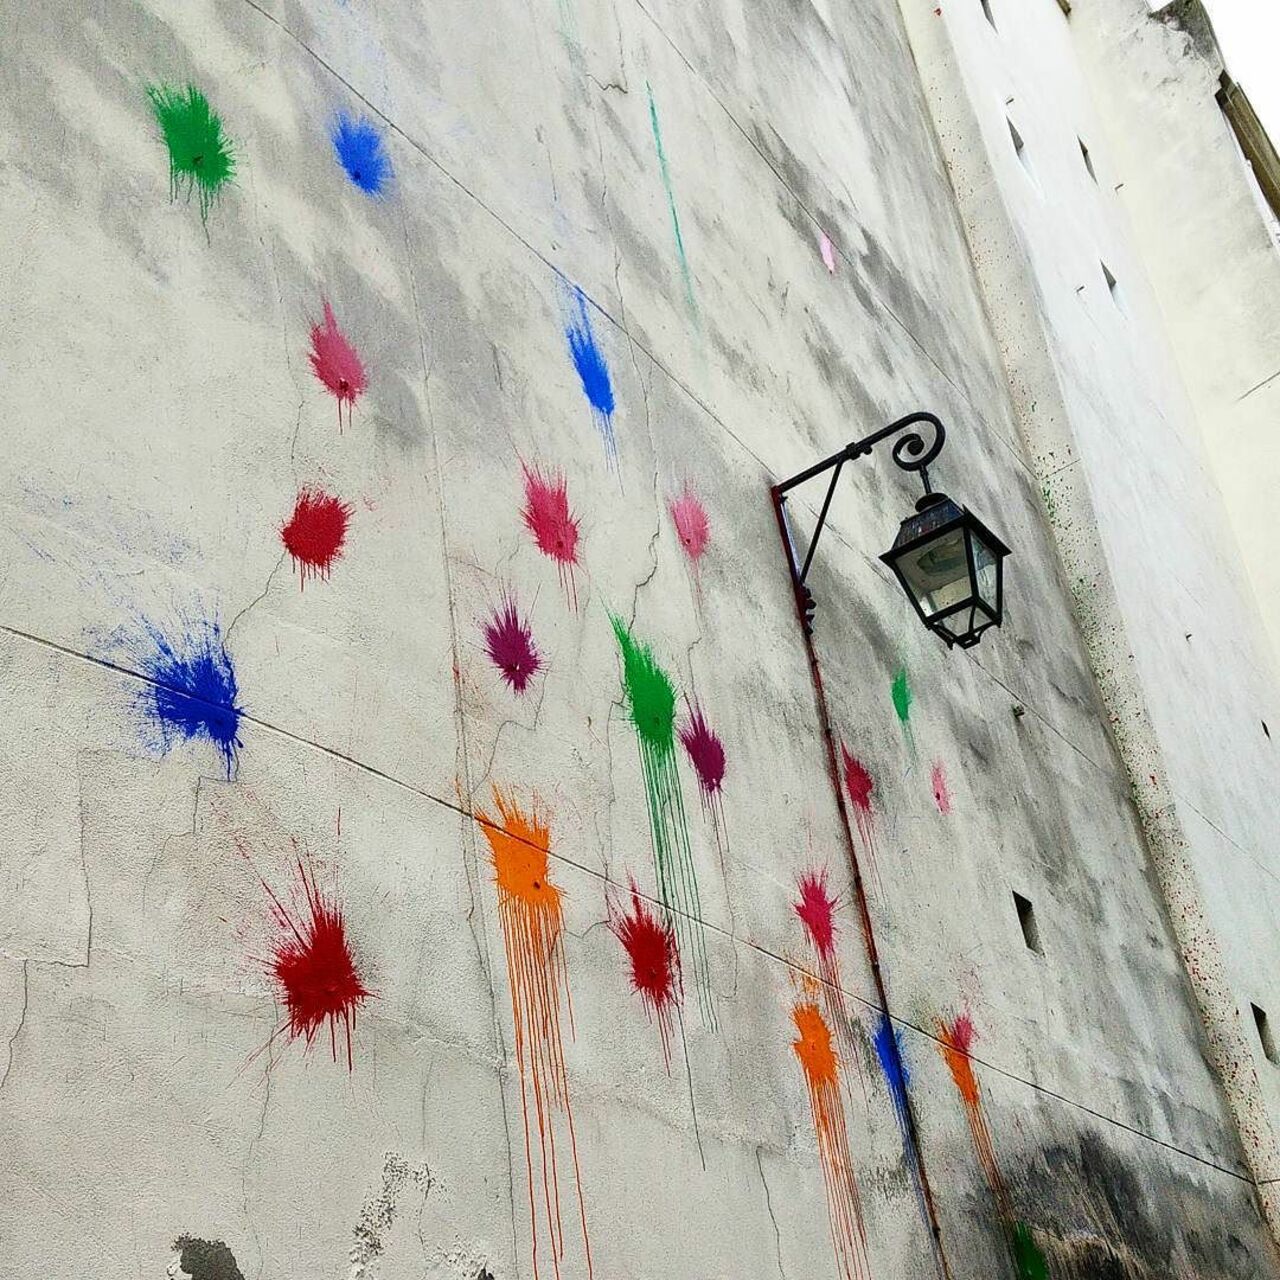 #Paris #graffiti photo by @ceky_art http://ift.tt/1PLKKBe #StreetArt https://t.co/rxnO8RfMe7